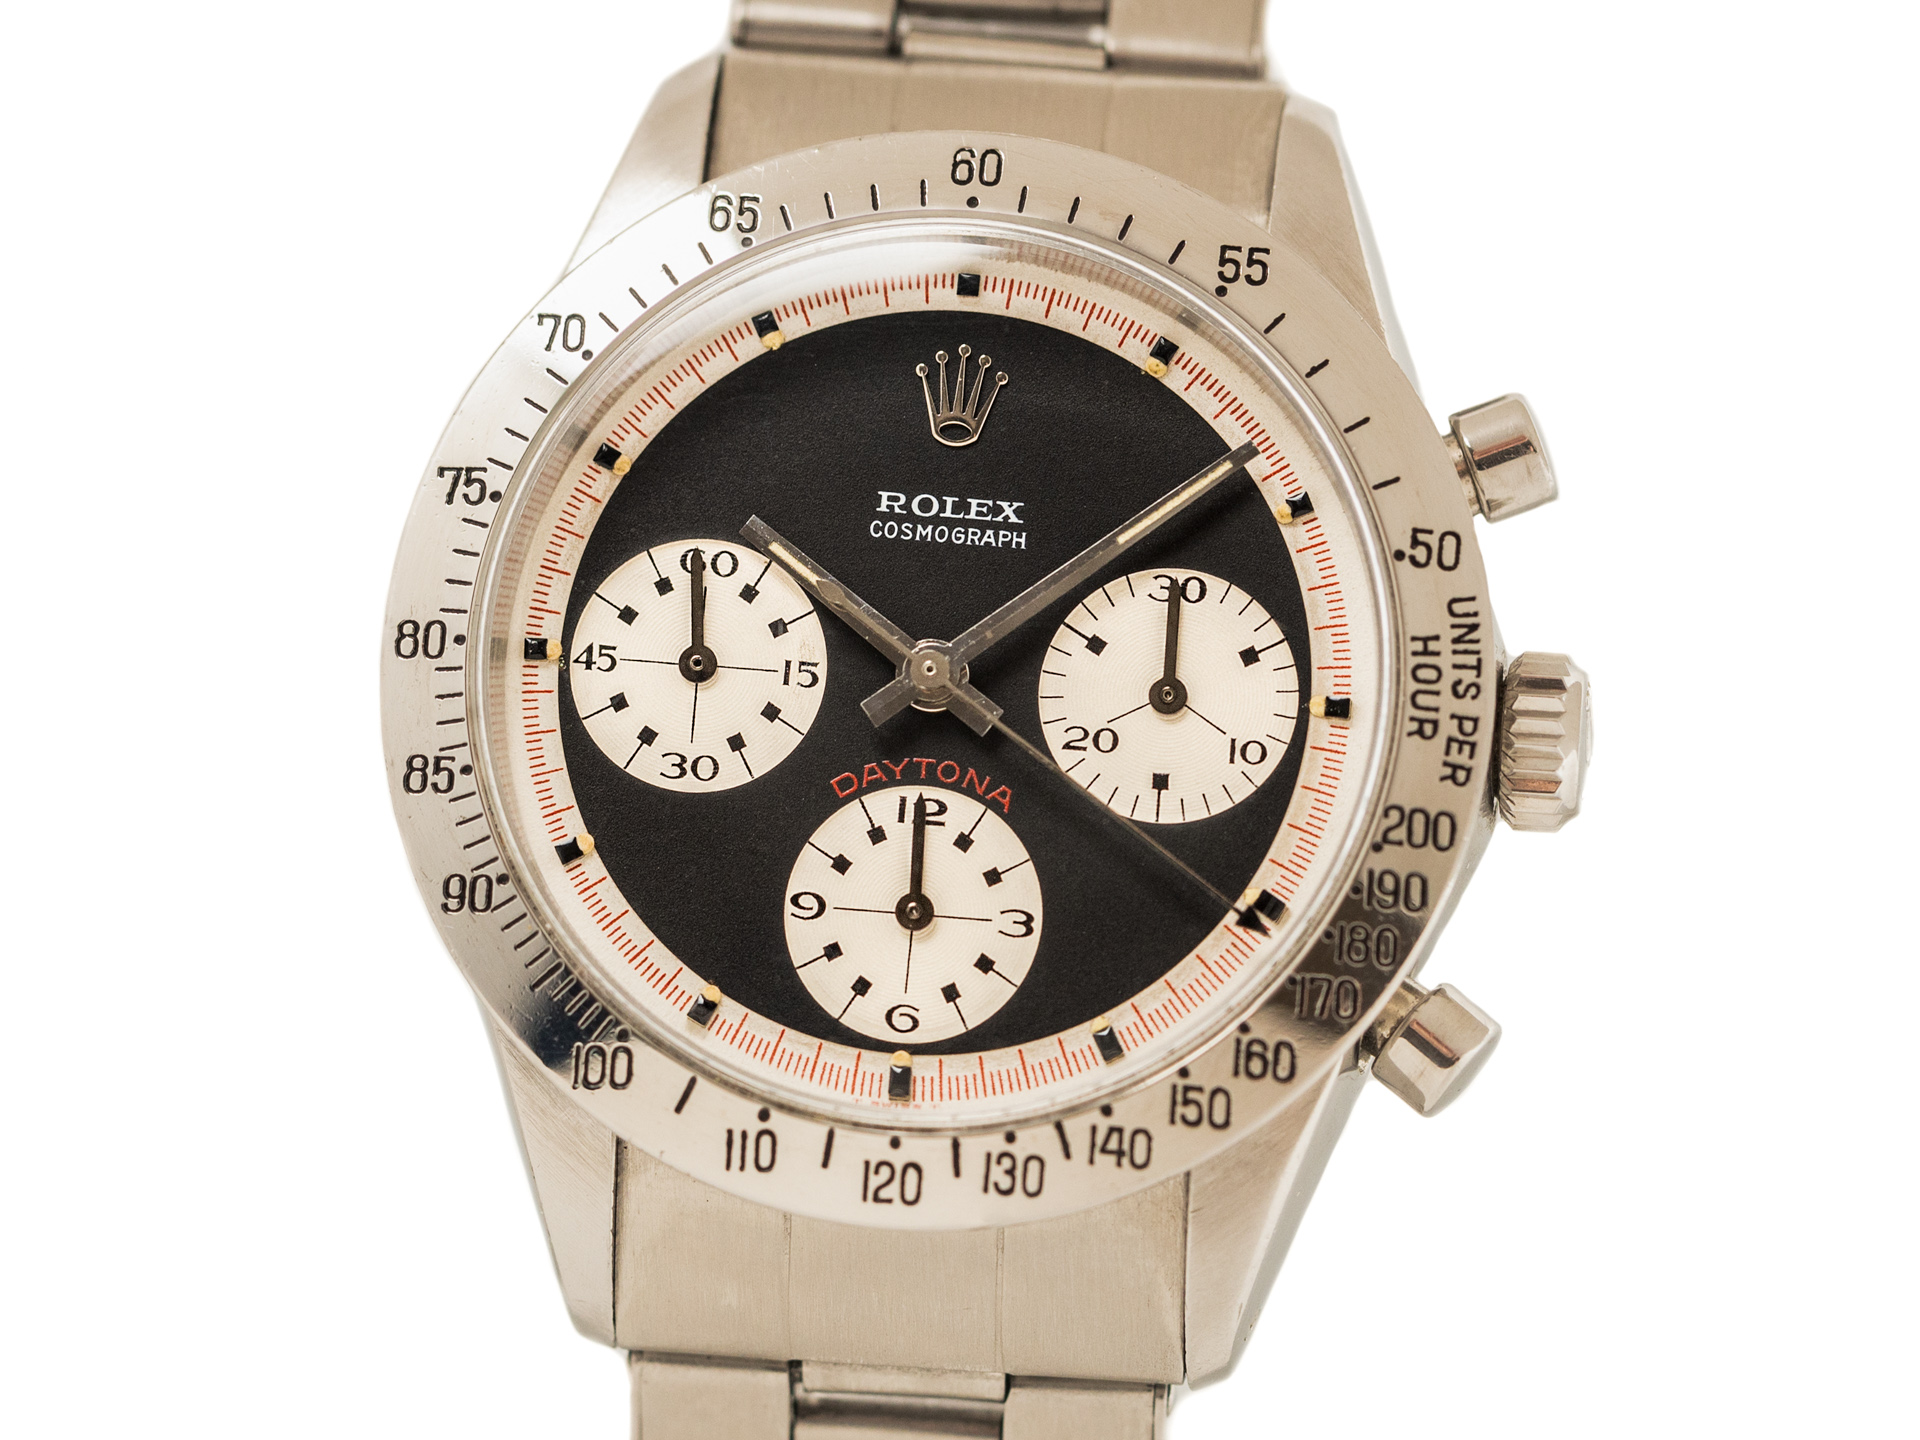 Daytona, 'Paul Newman' reference 6262 Montre bracelet chronographe